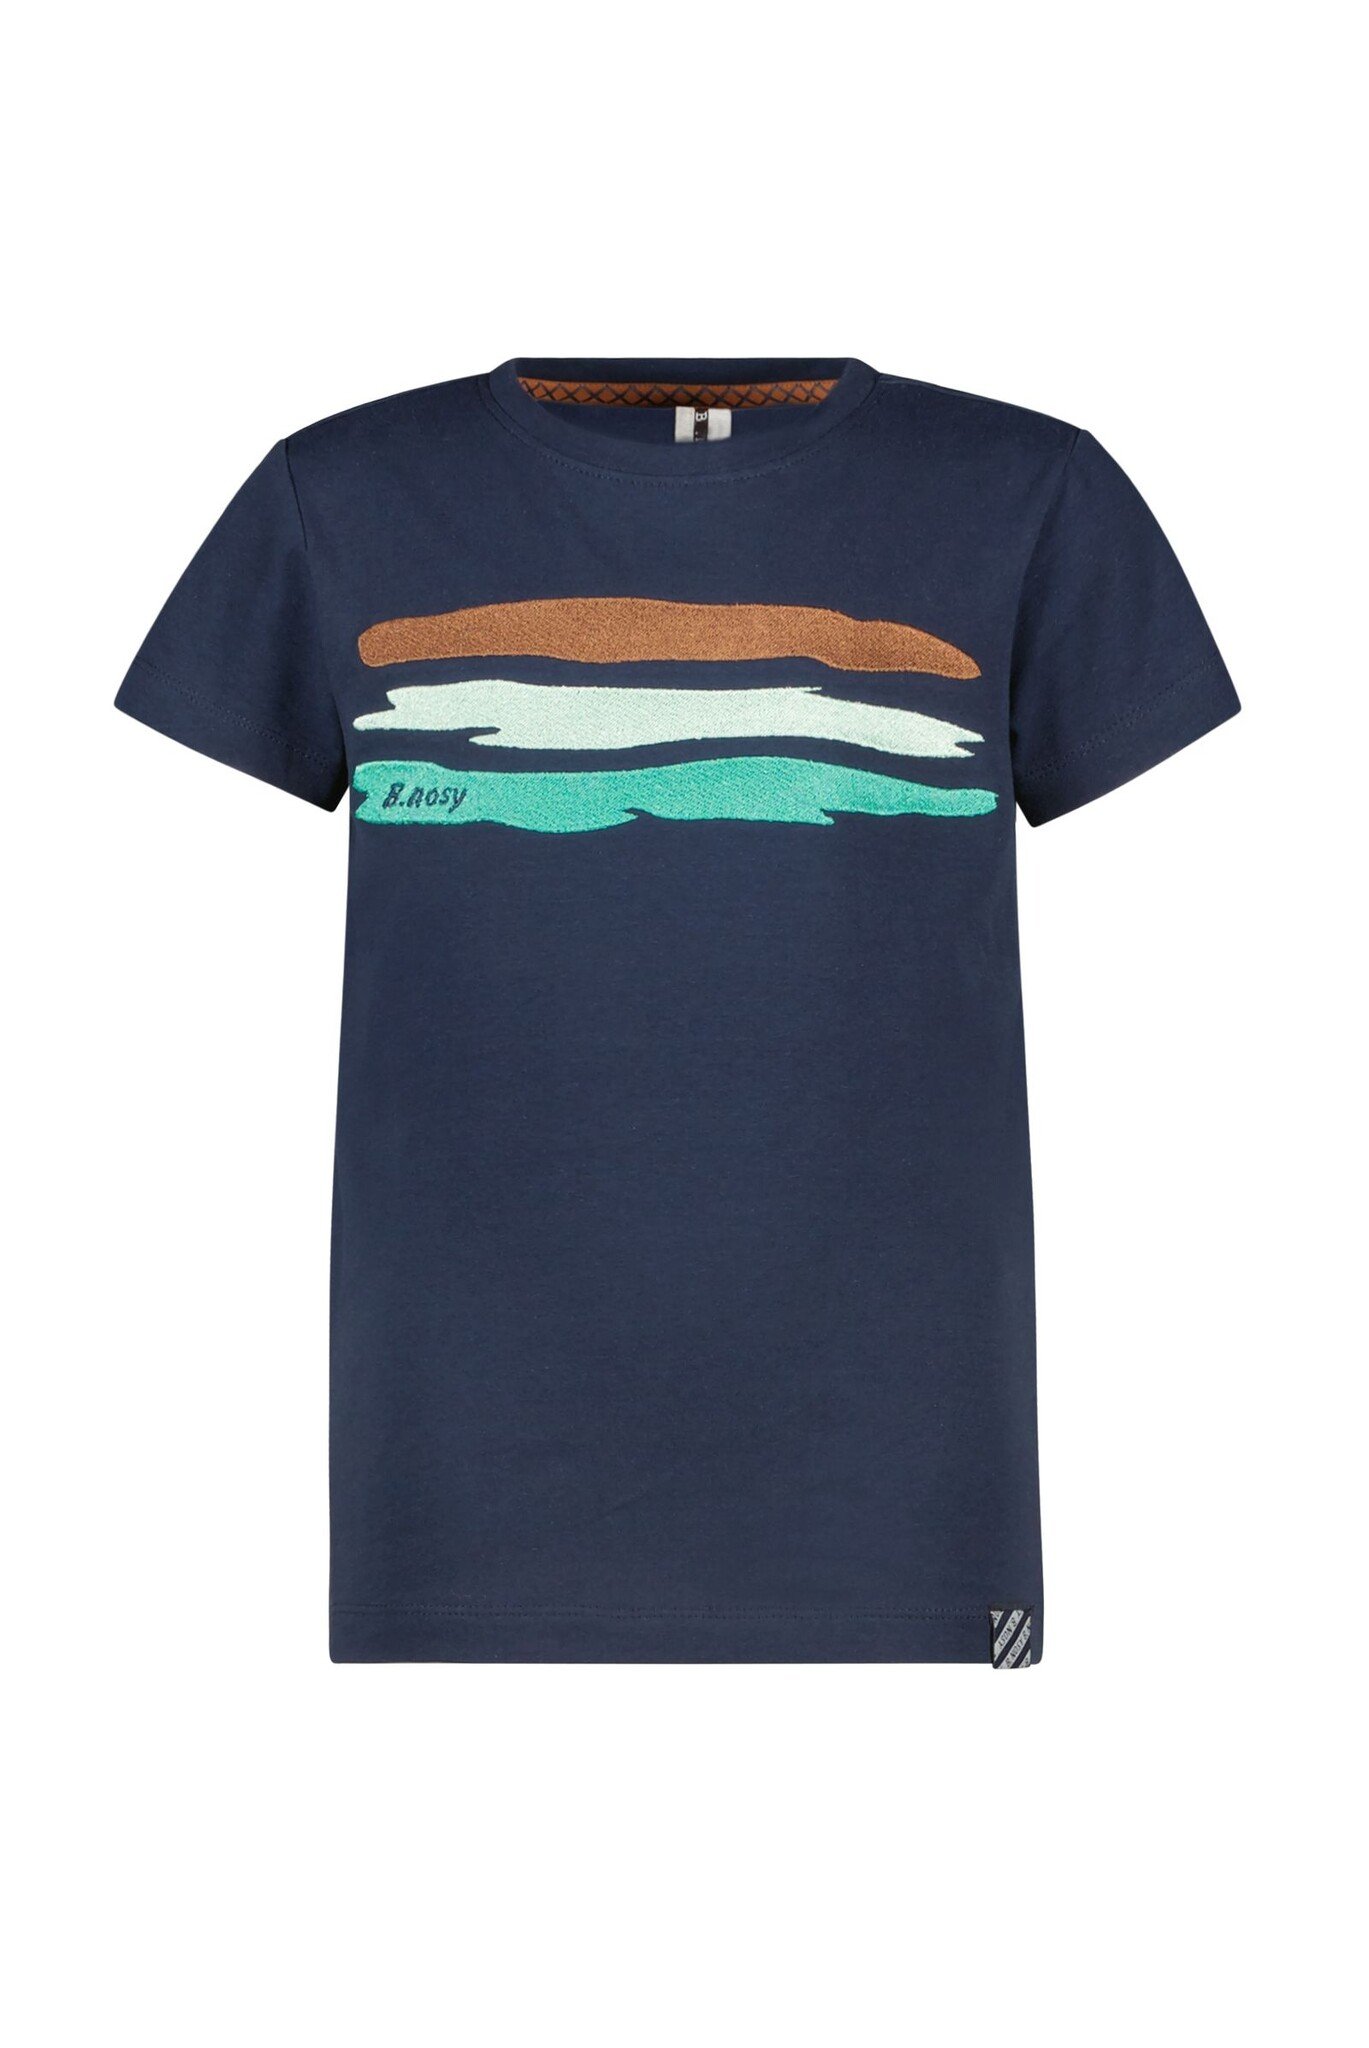 B.Nosy Jongens t-shirt - Morris - Navy blauw